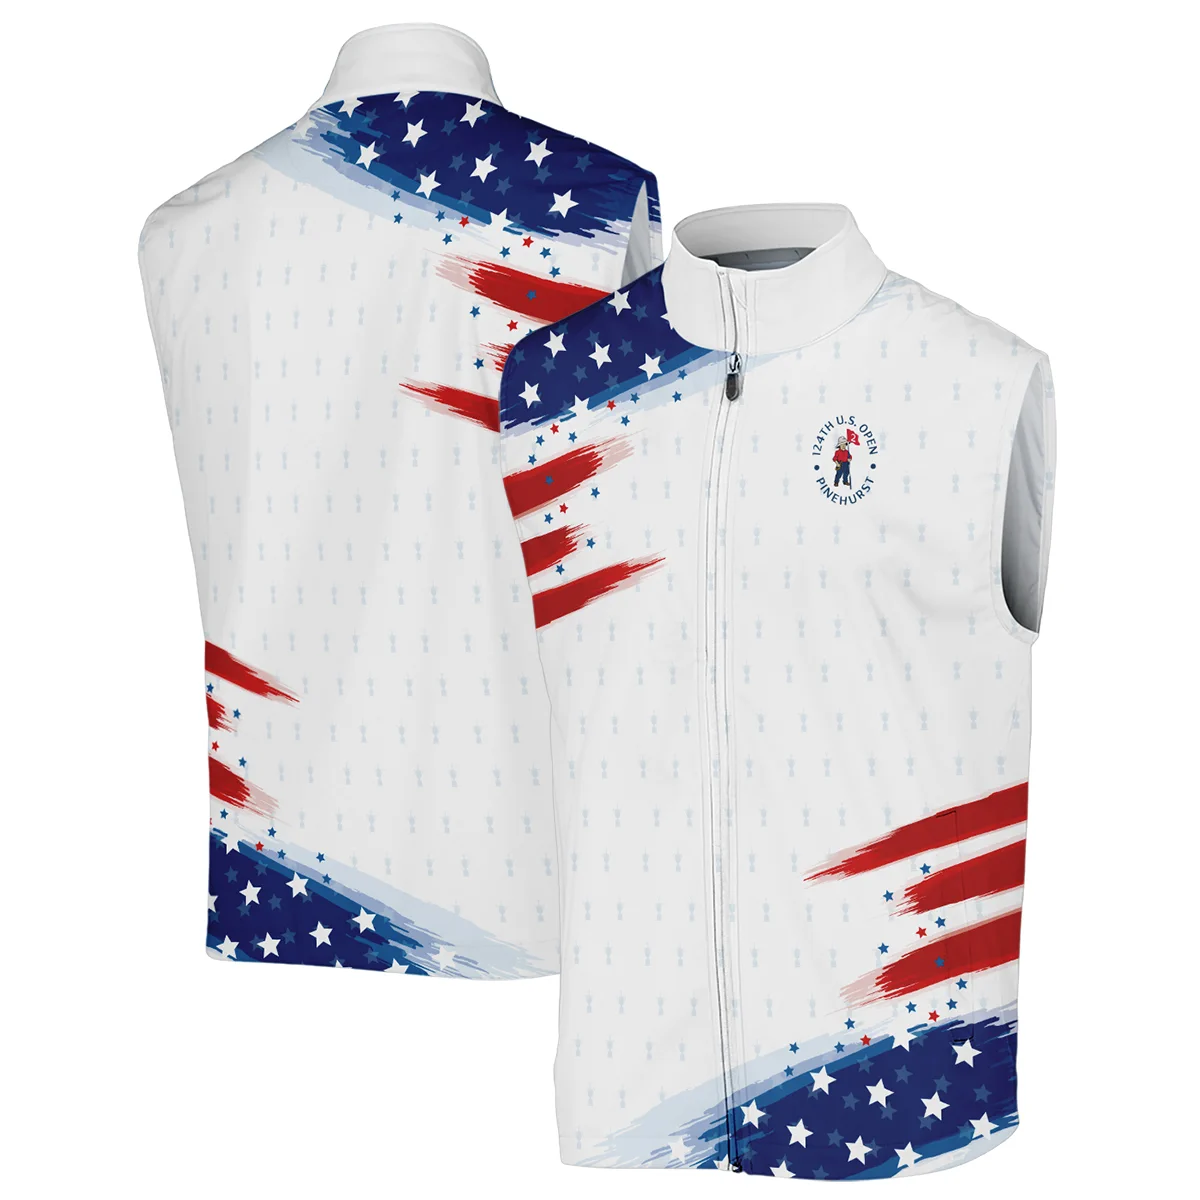 Tournament 124th U.S. Open Pinehurst Ping Hoodie Shirt Flag American White And Blue All Over Print Hoodie Shirt